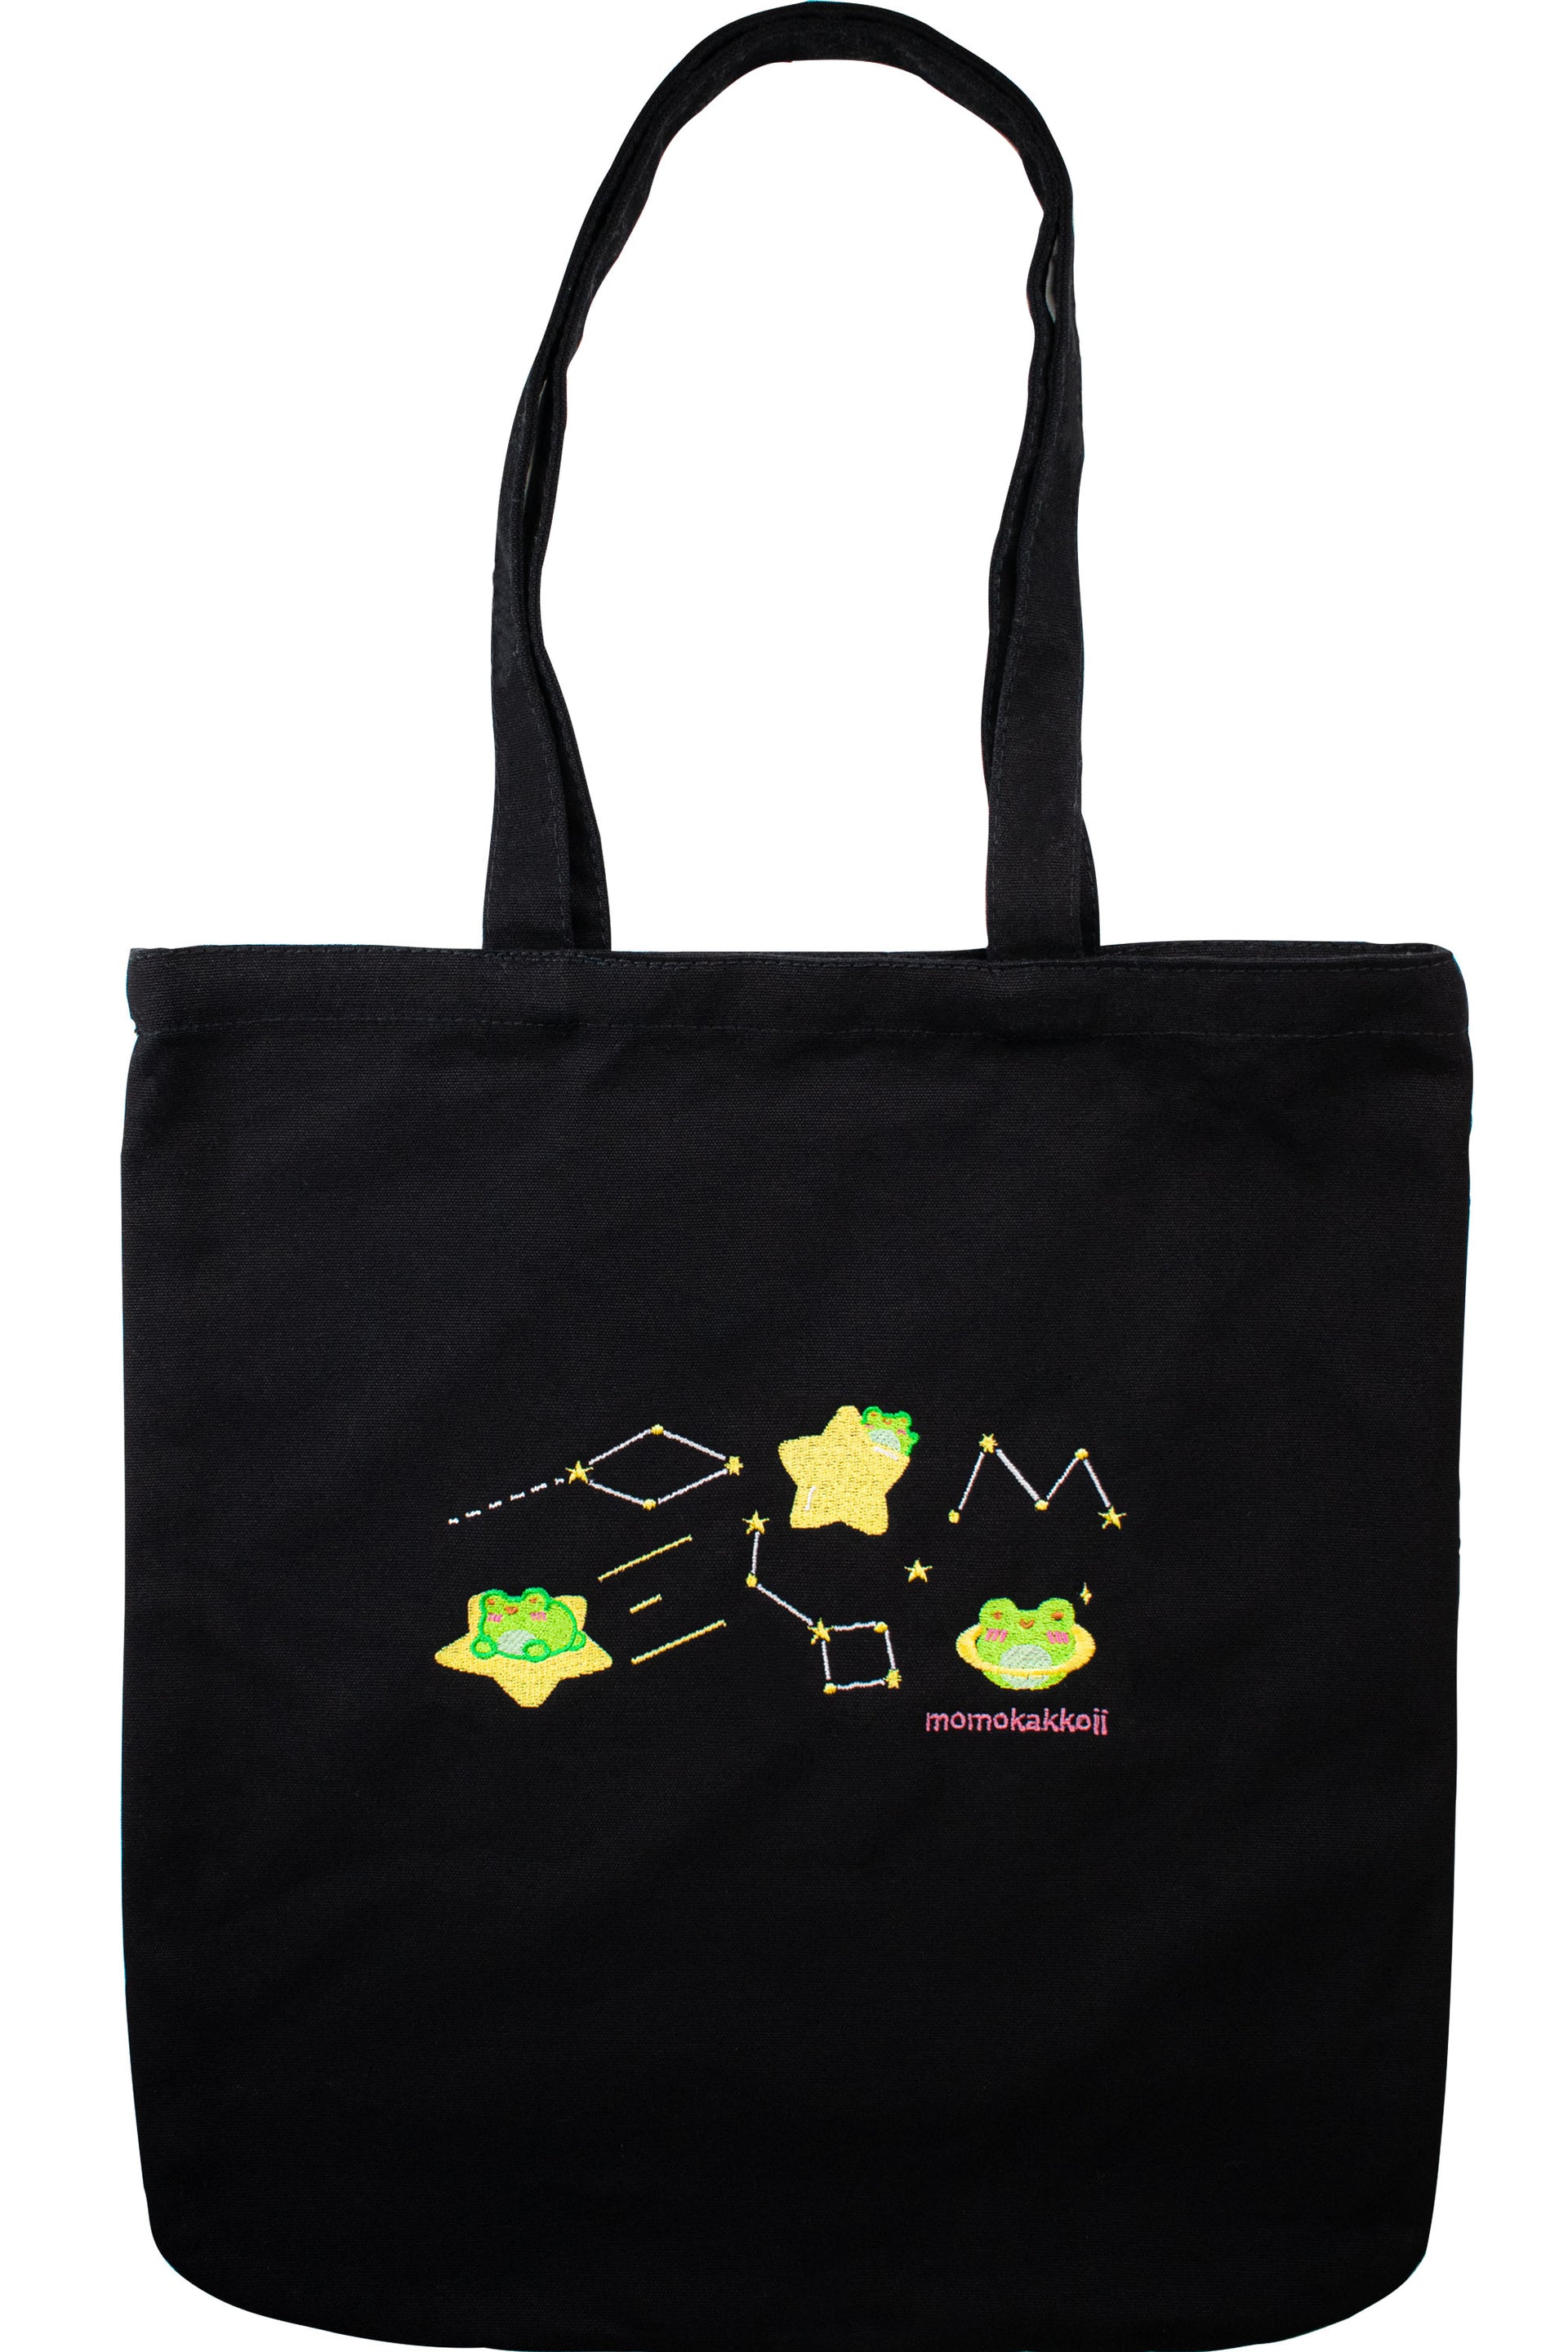 Organic Cotton Cosmic Albert Embroidered Tote Bag - Momokakkoii